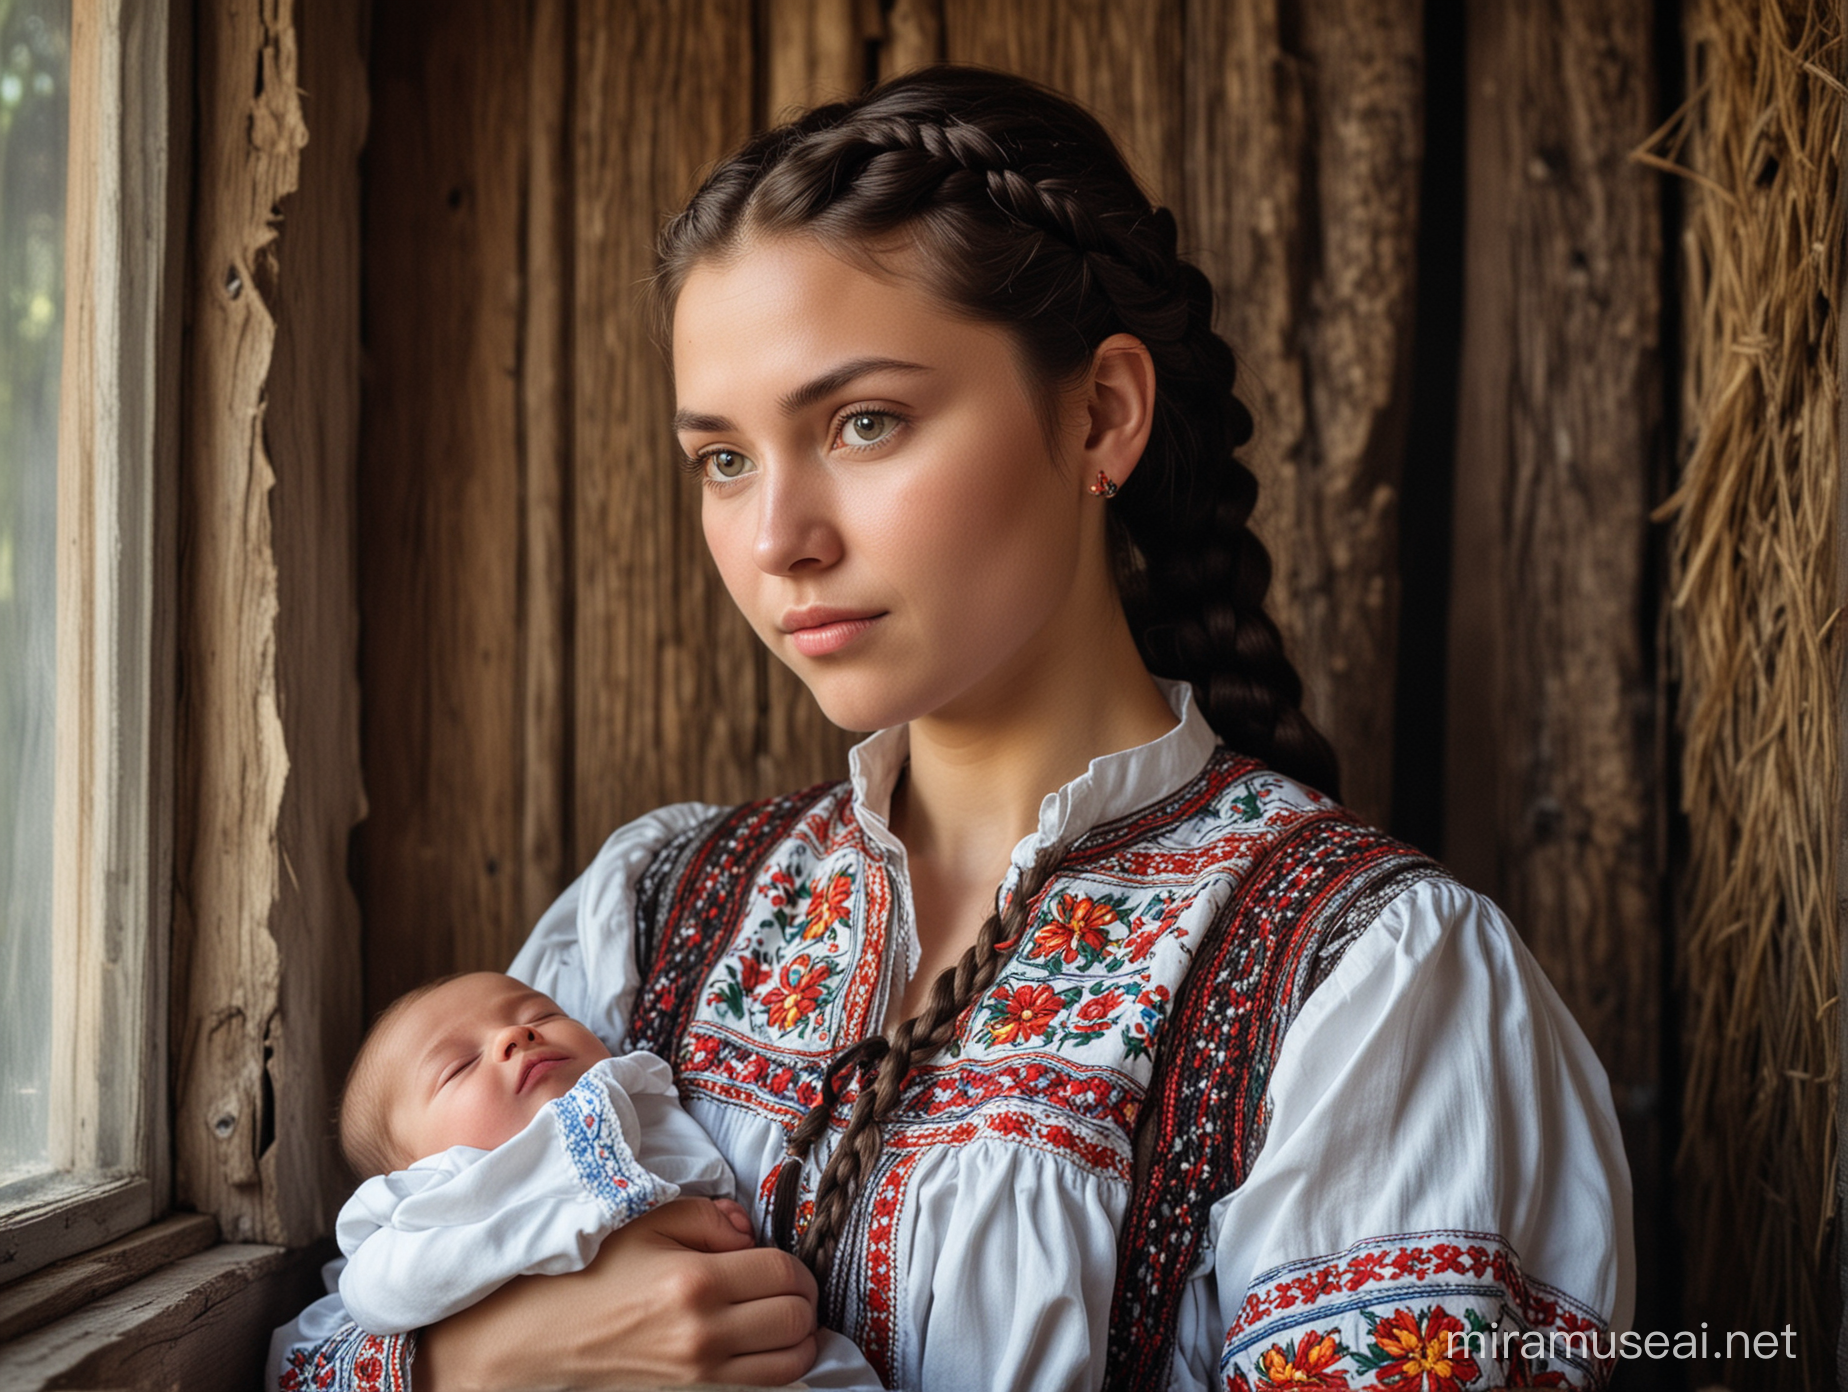 Traditional Ukrainian Girl Gazing Out Window with Baby